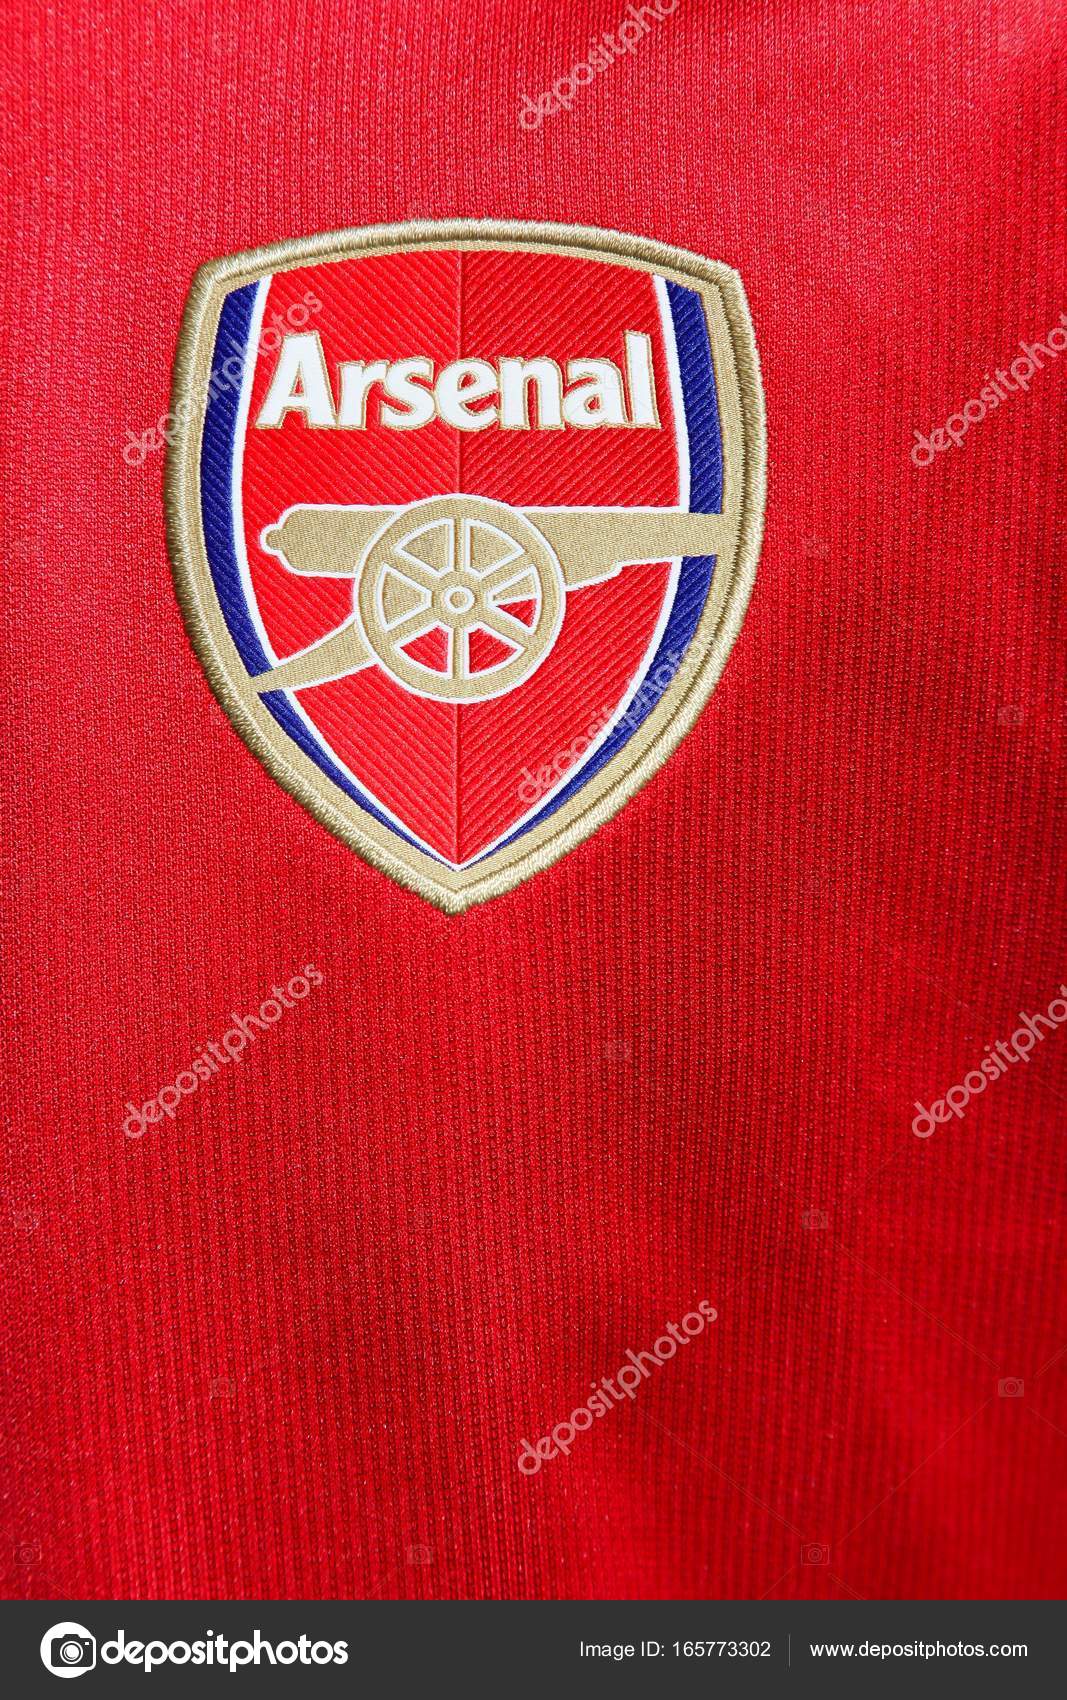 arsenal football club jersey